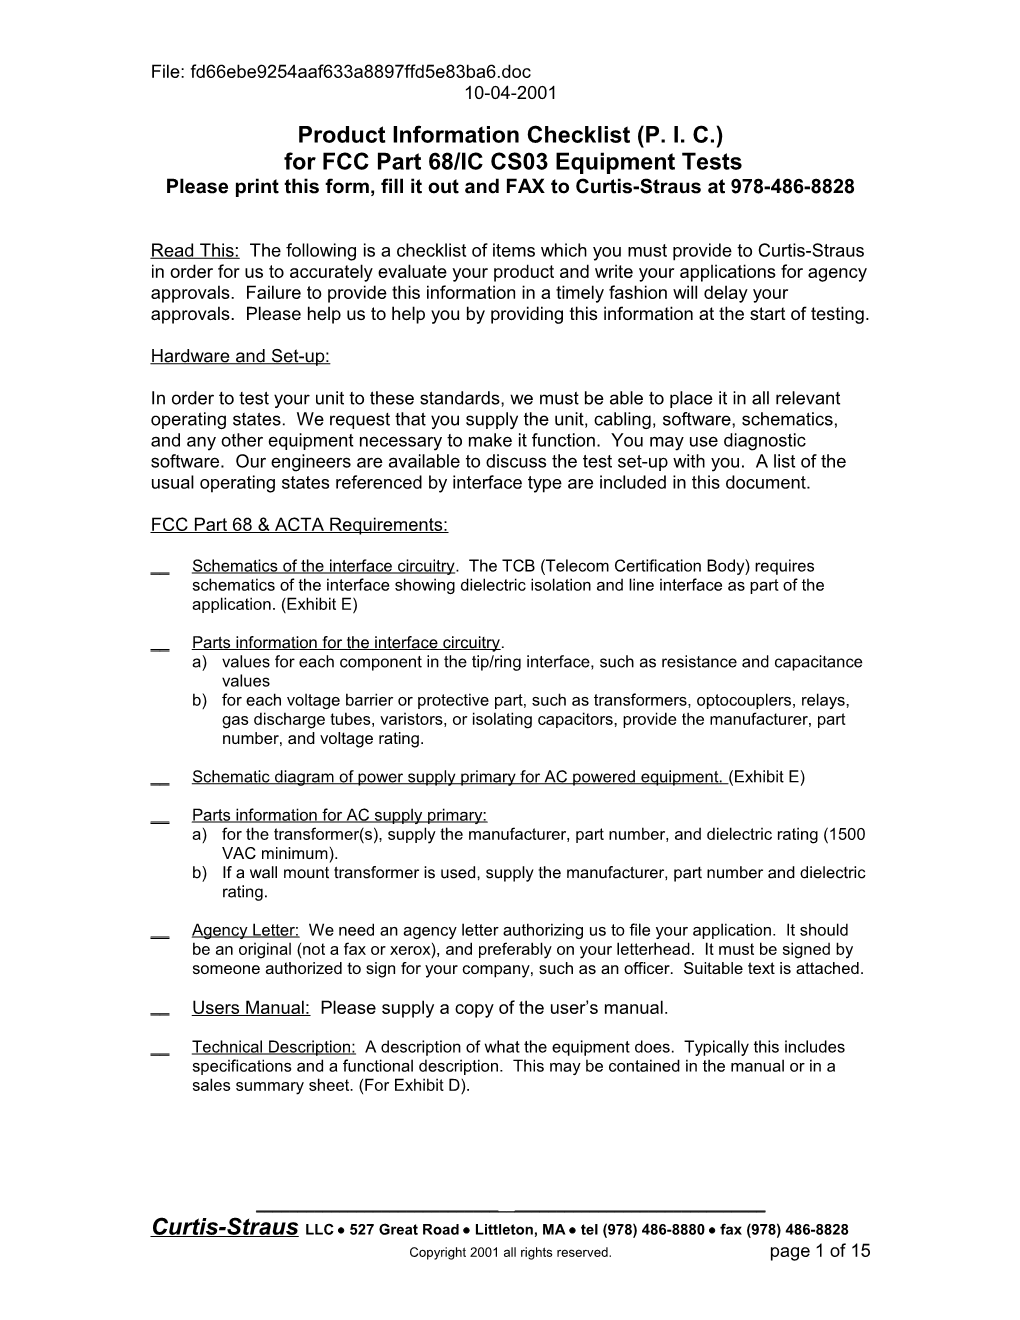 Checklist for FCC Part 68/IC CS03 Equipment Tests